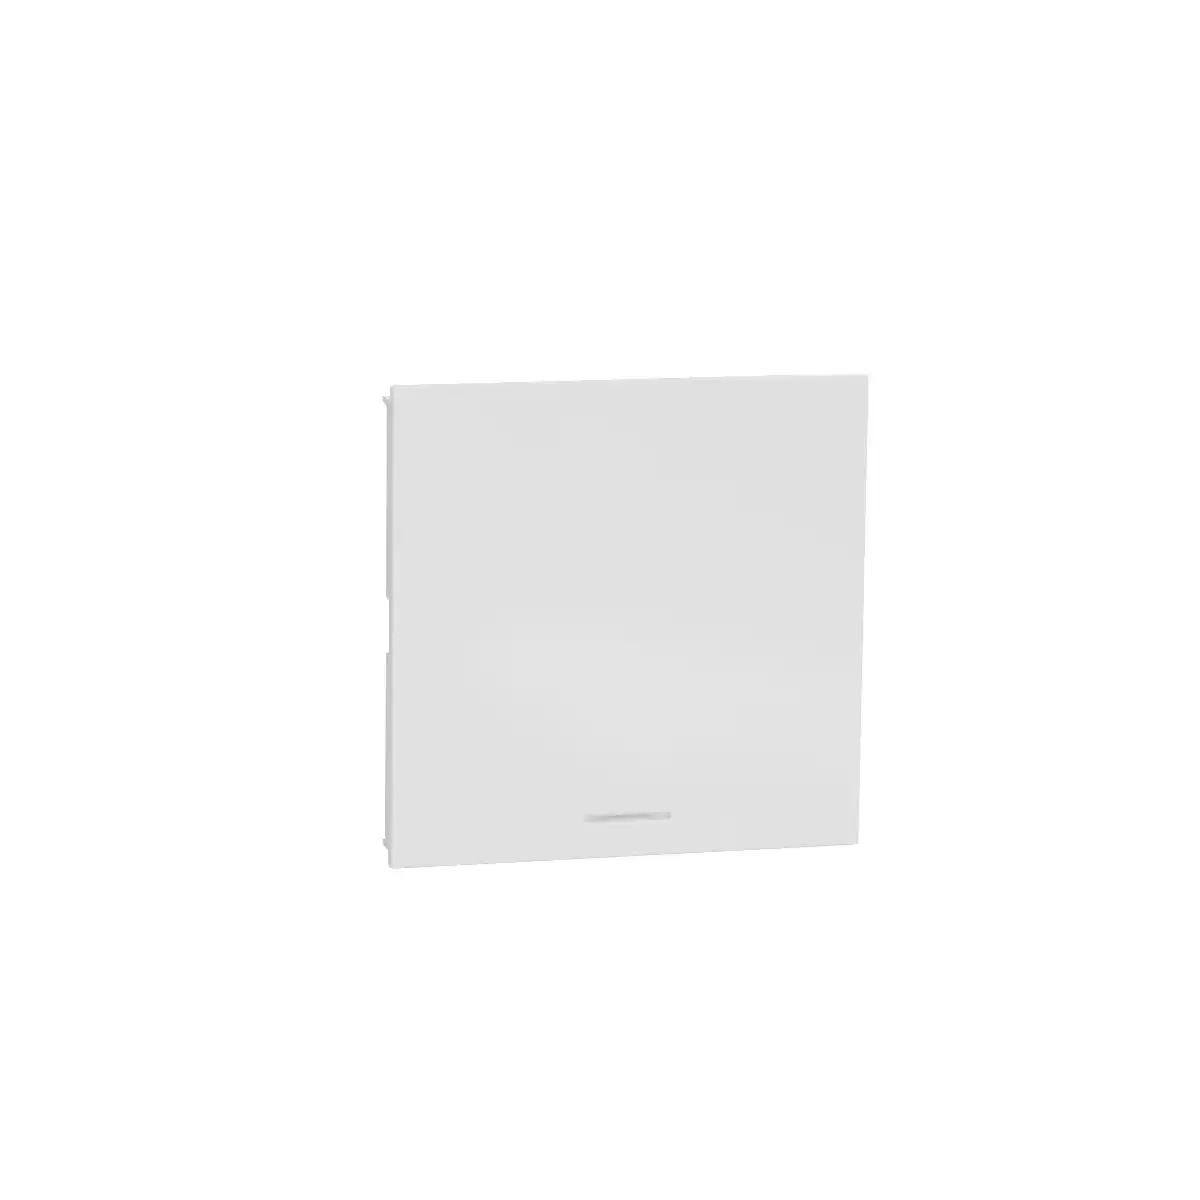 Switch, Avataron A, 16AX 250V, 2 Way, E sized, White